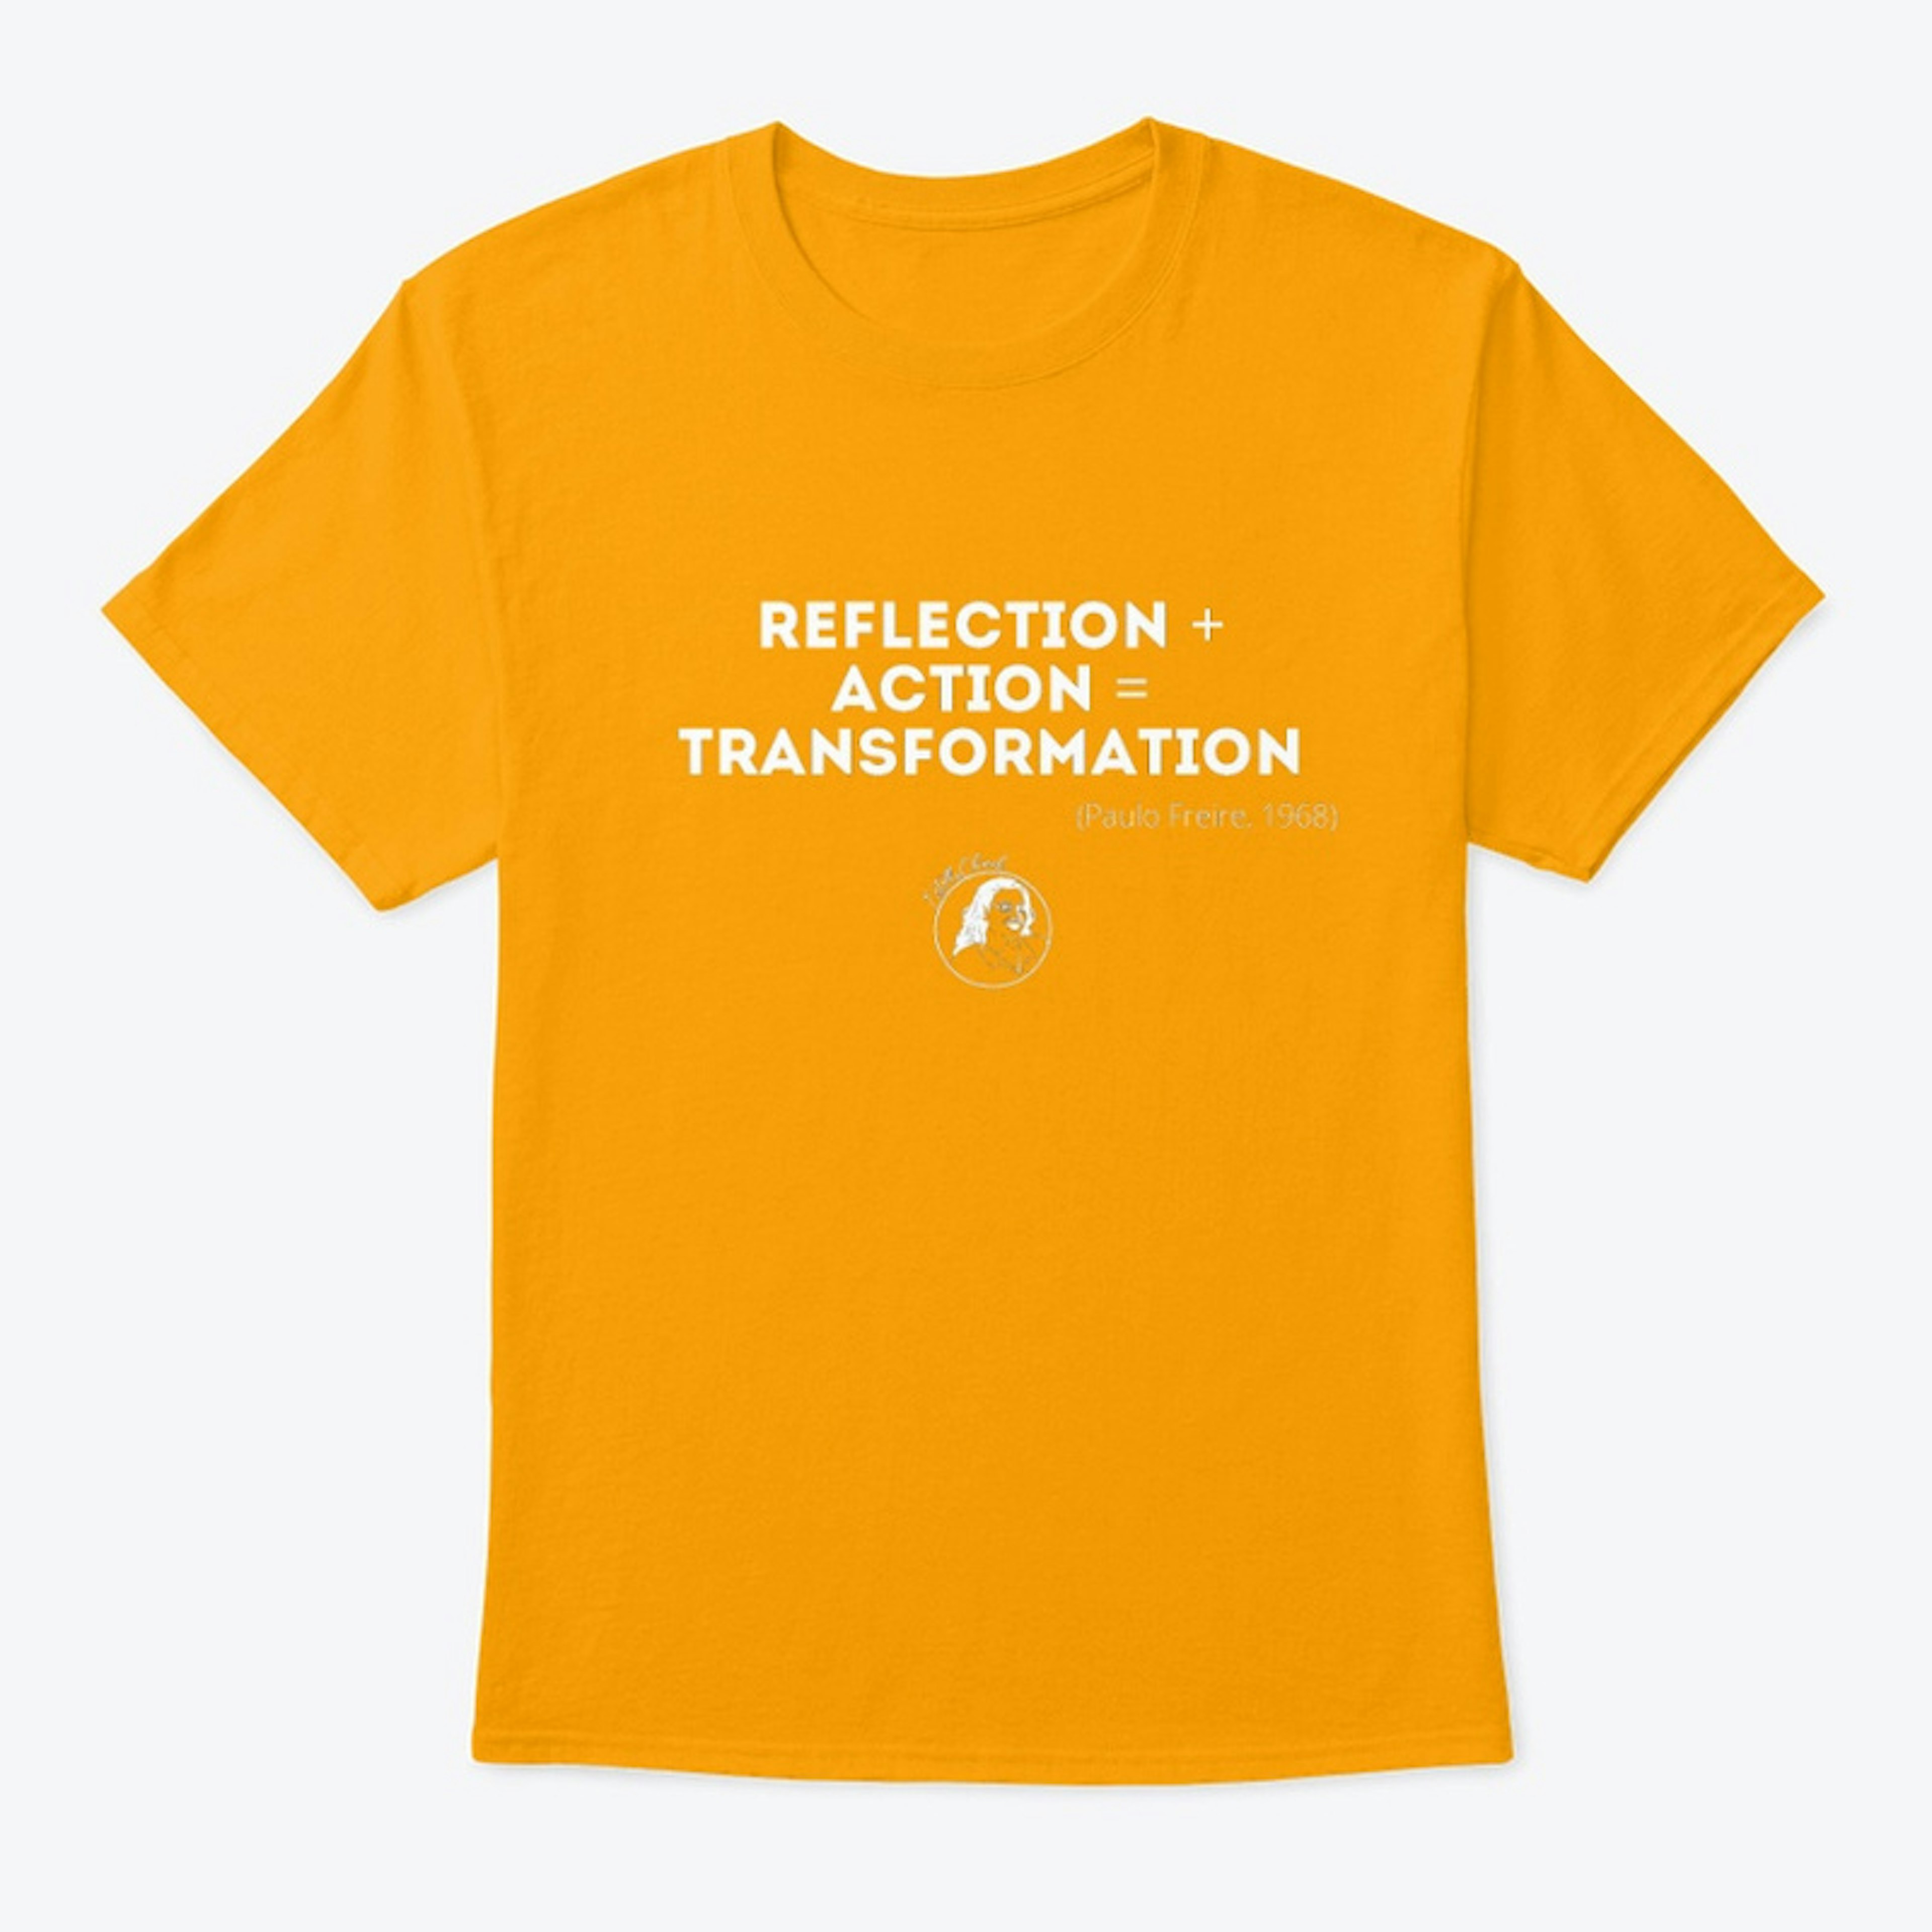 Transformation T-Shirt (P.F., 1968)